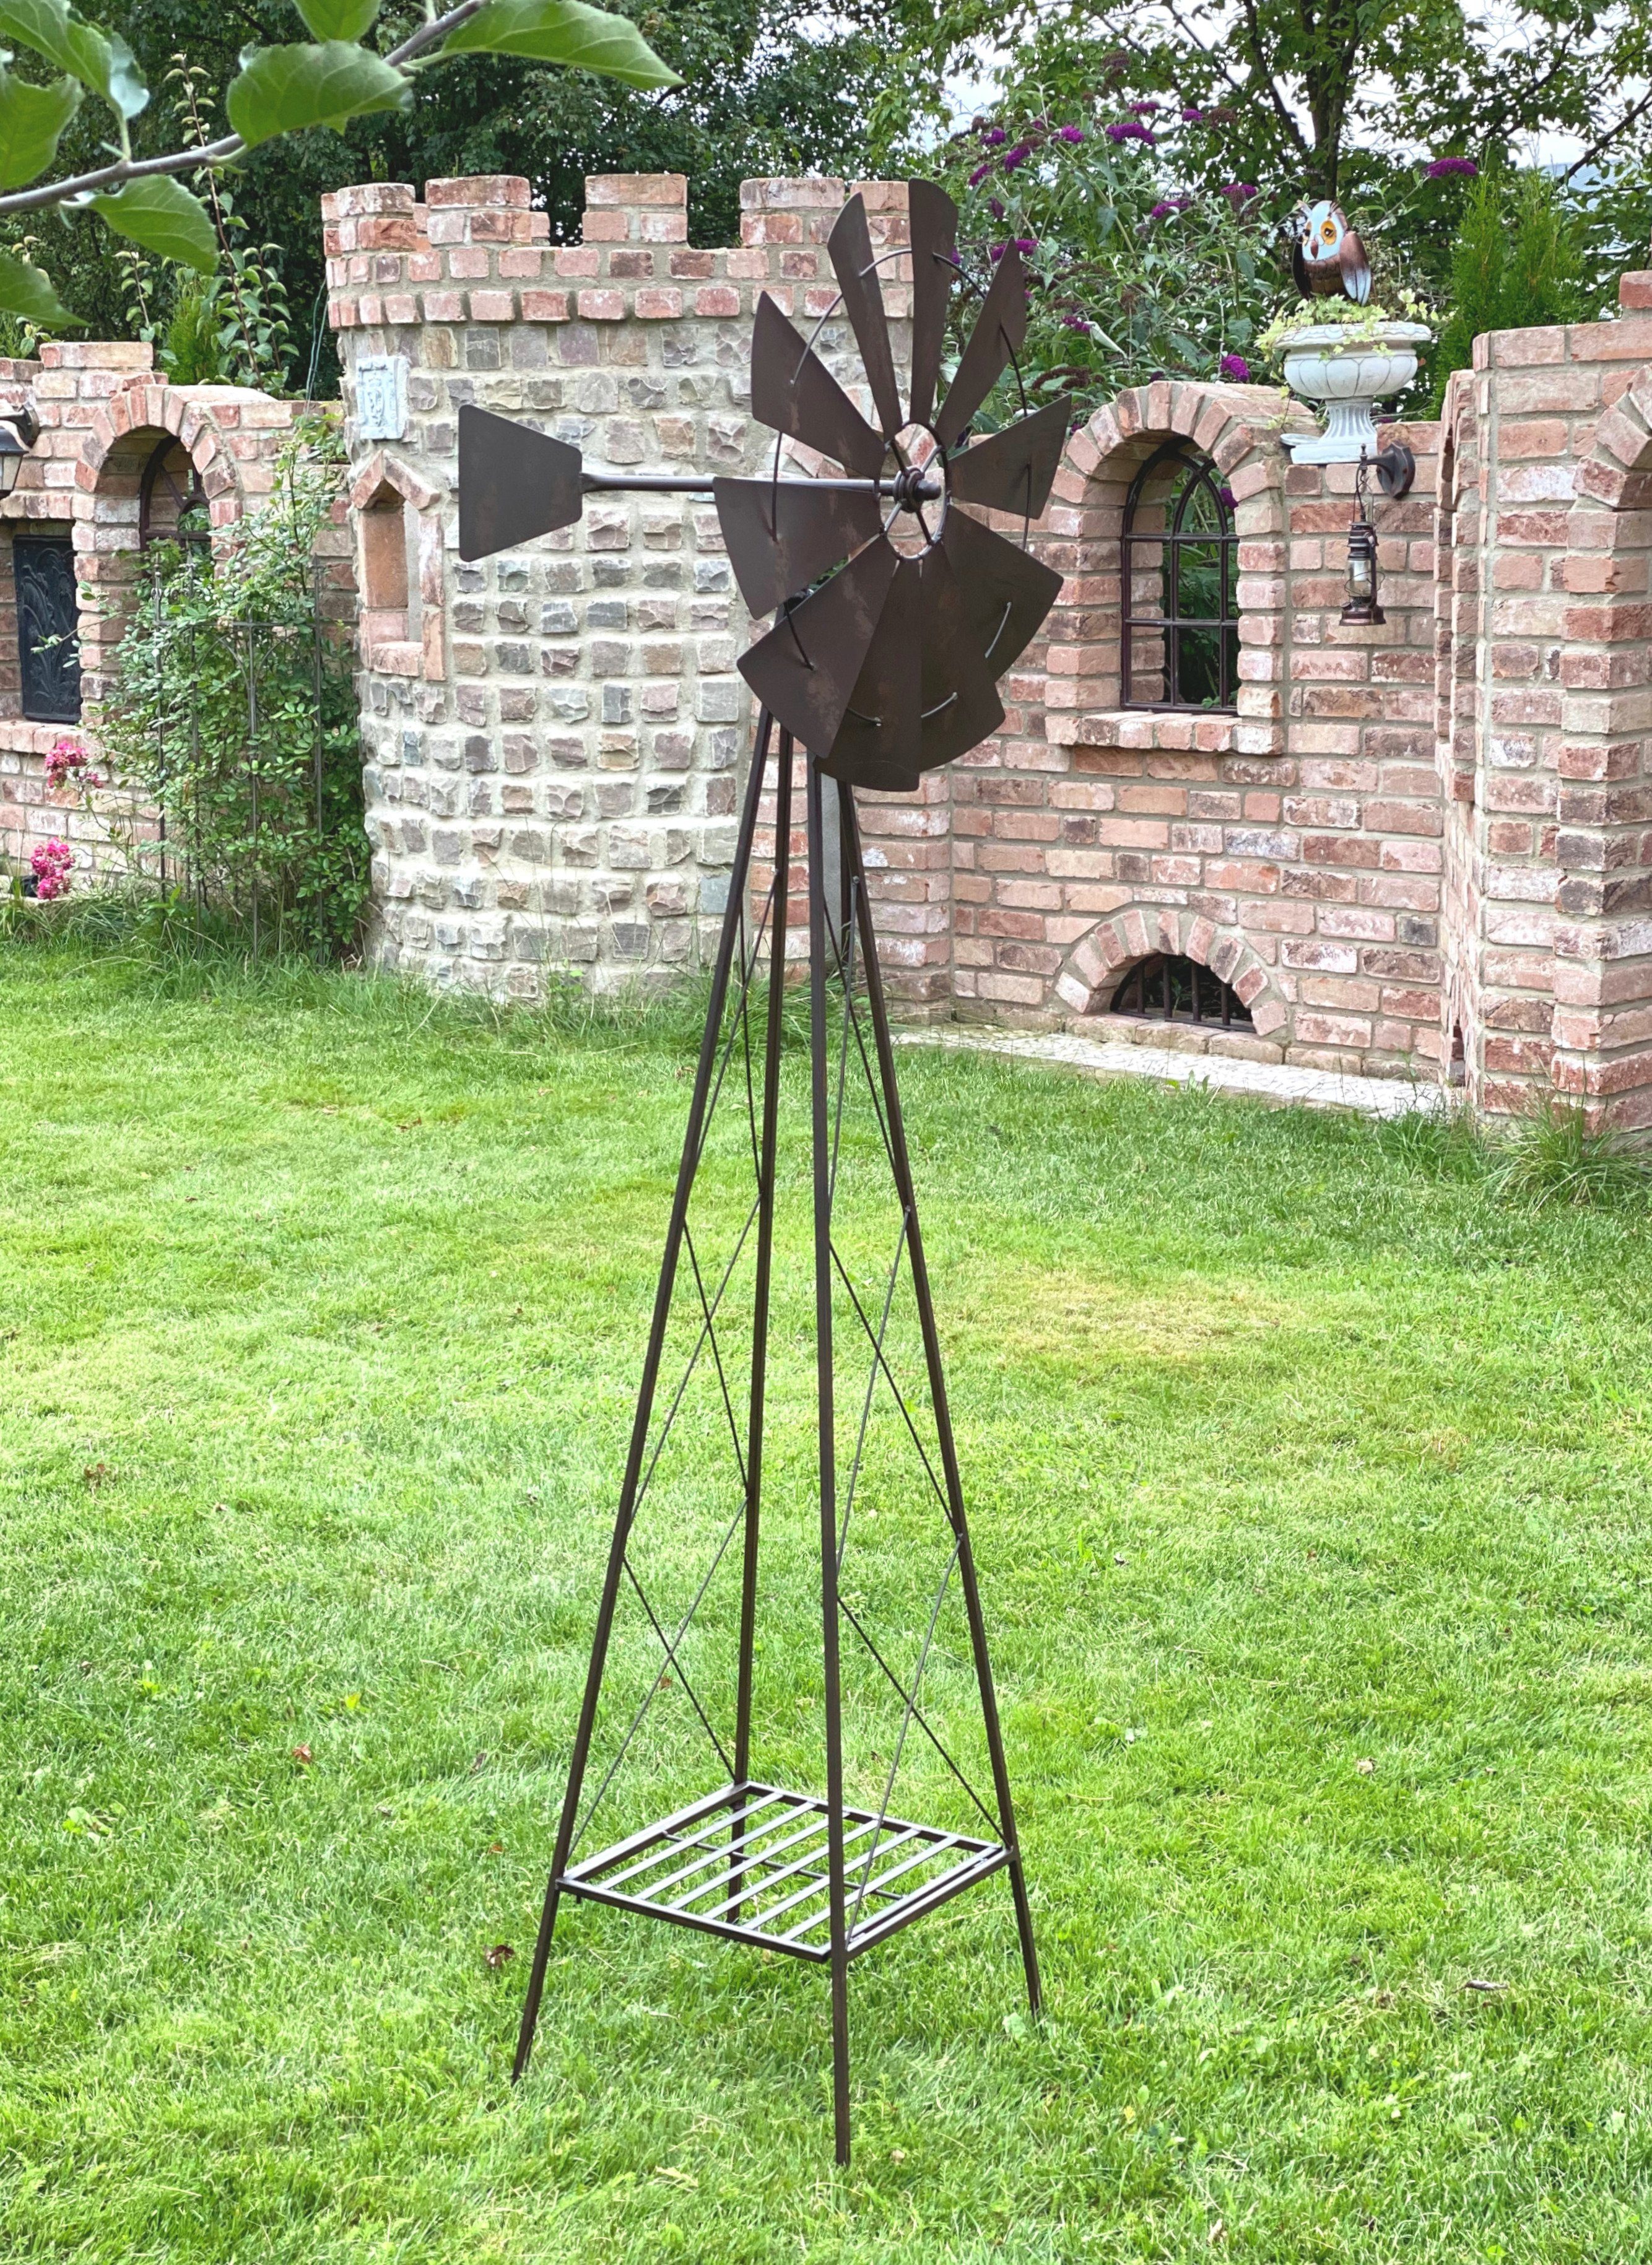 Garten Braun Deko-Windrad Metall DanDiBo Windmühle 170 Bodenstecker Wetterfest Gartendeko Gartenstecker kugelgelagert 96019 Windrad cm Windspiel